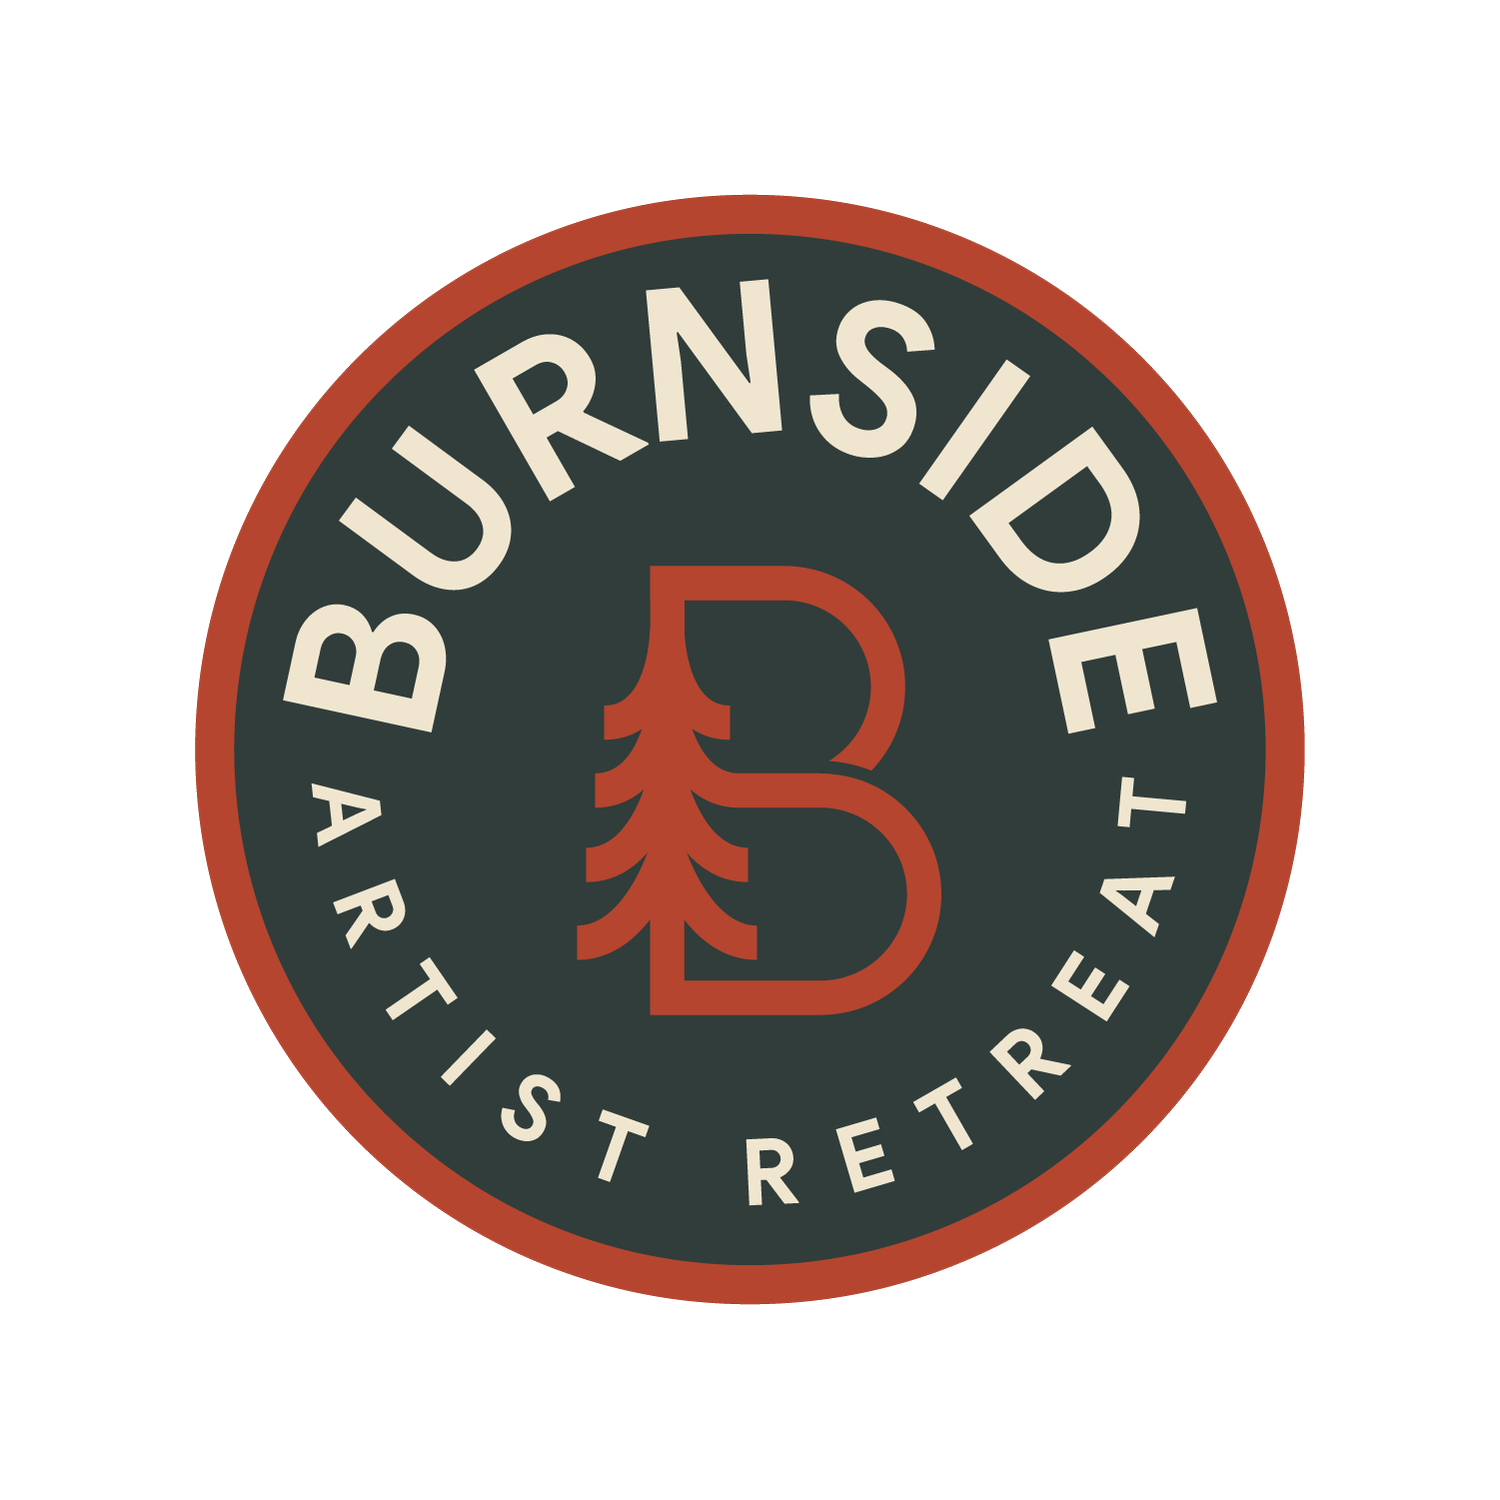 Burnside Artist Retreat